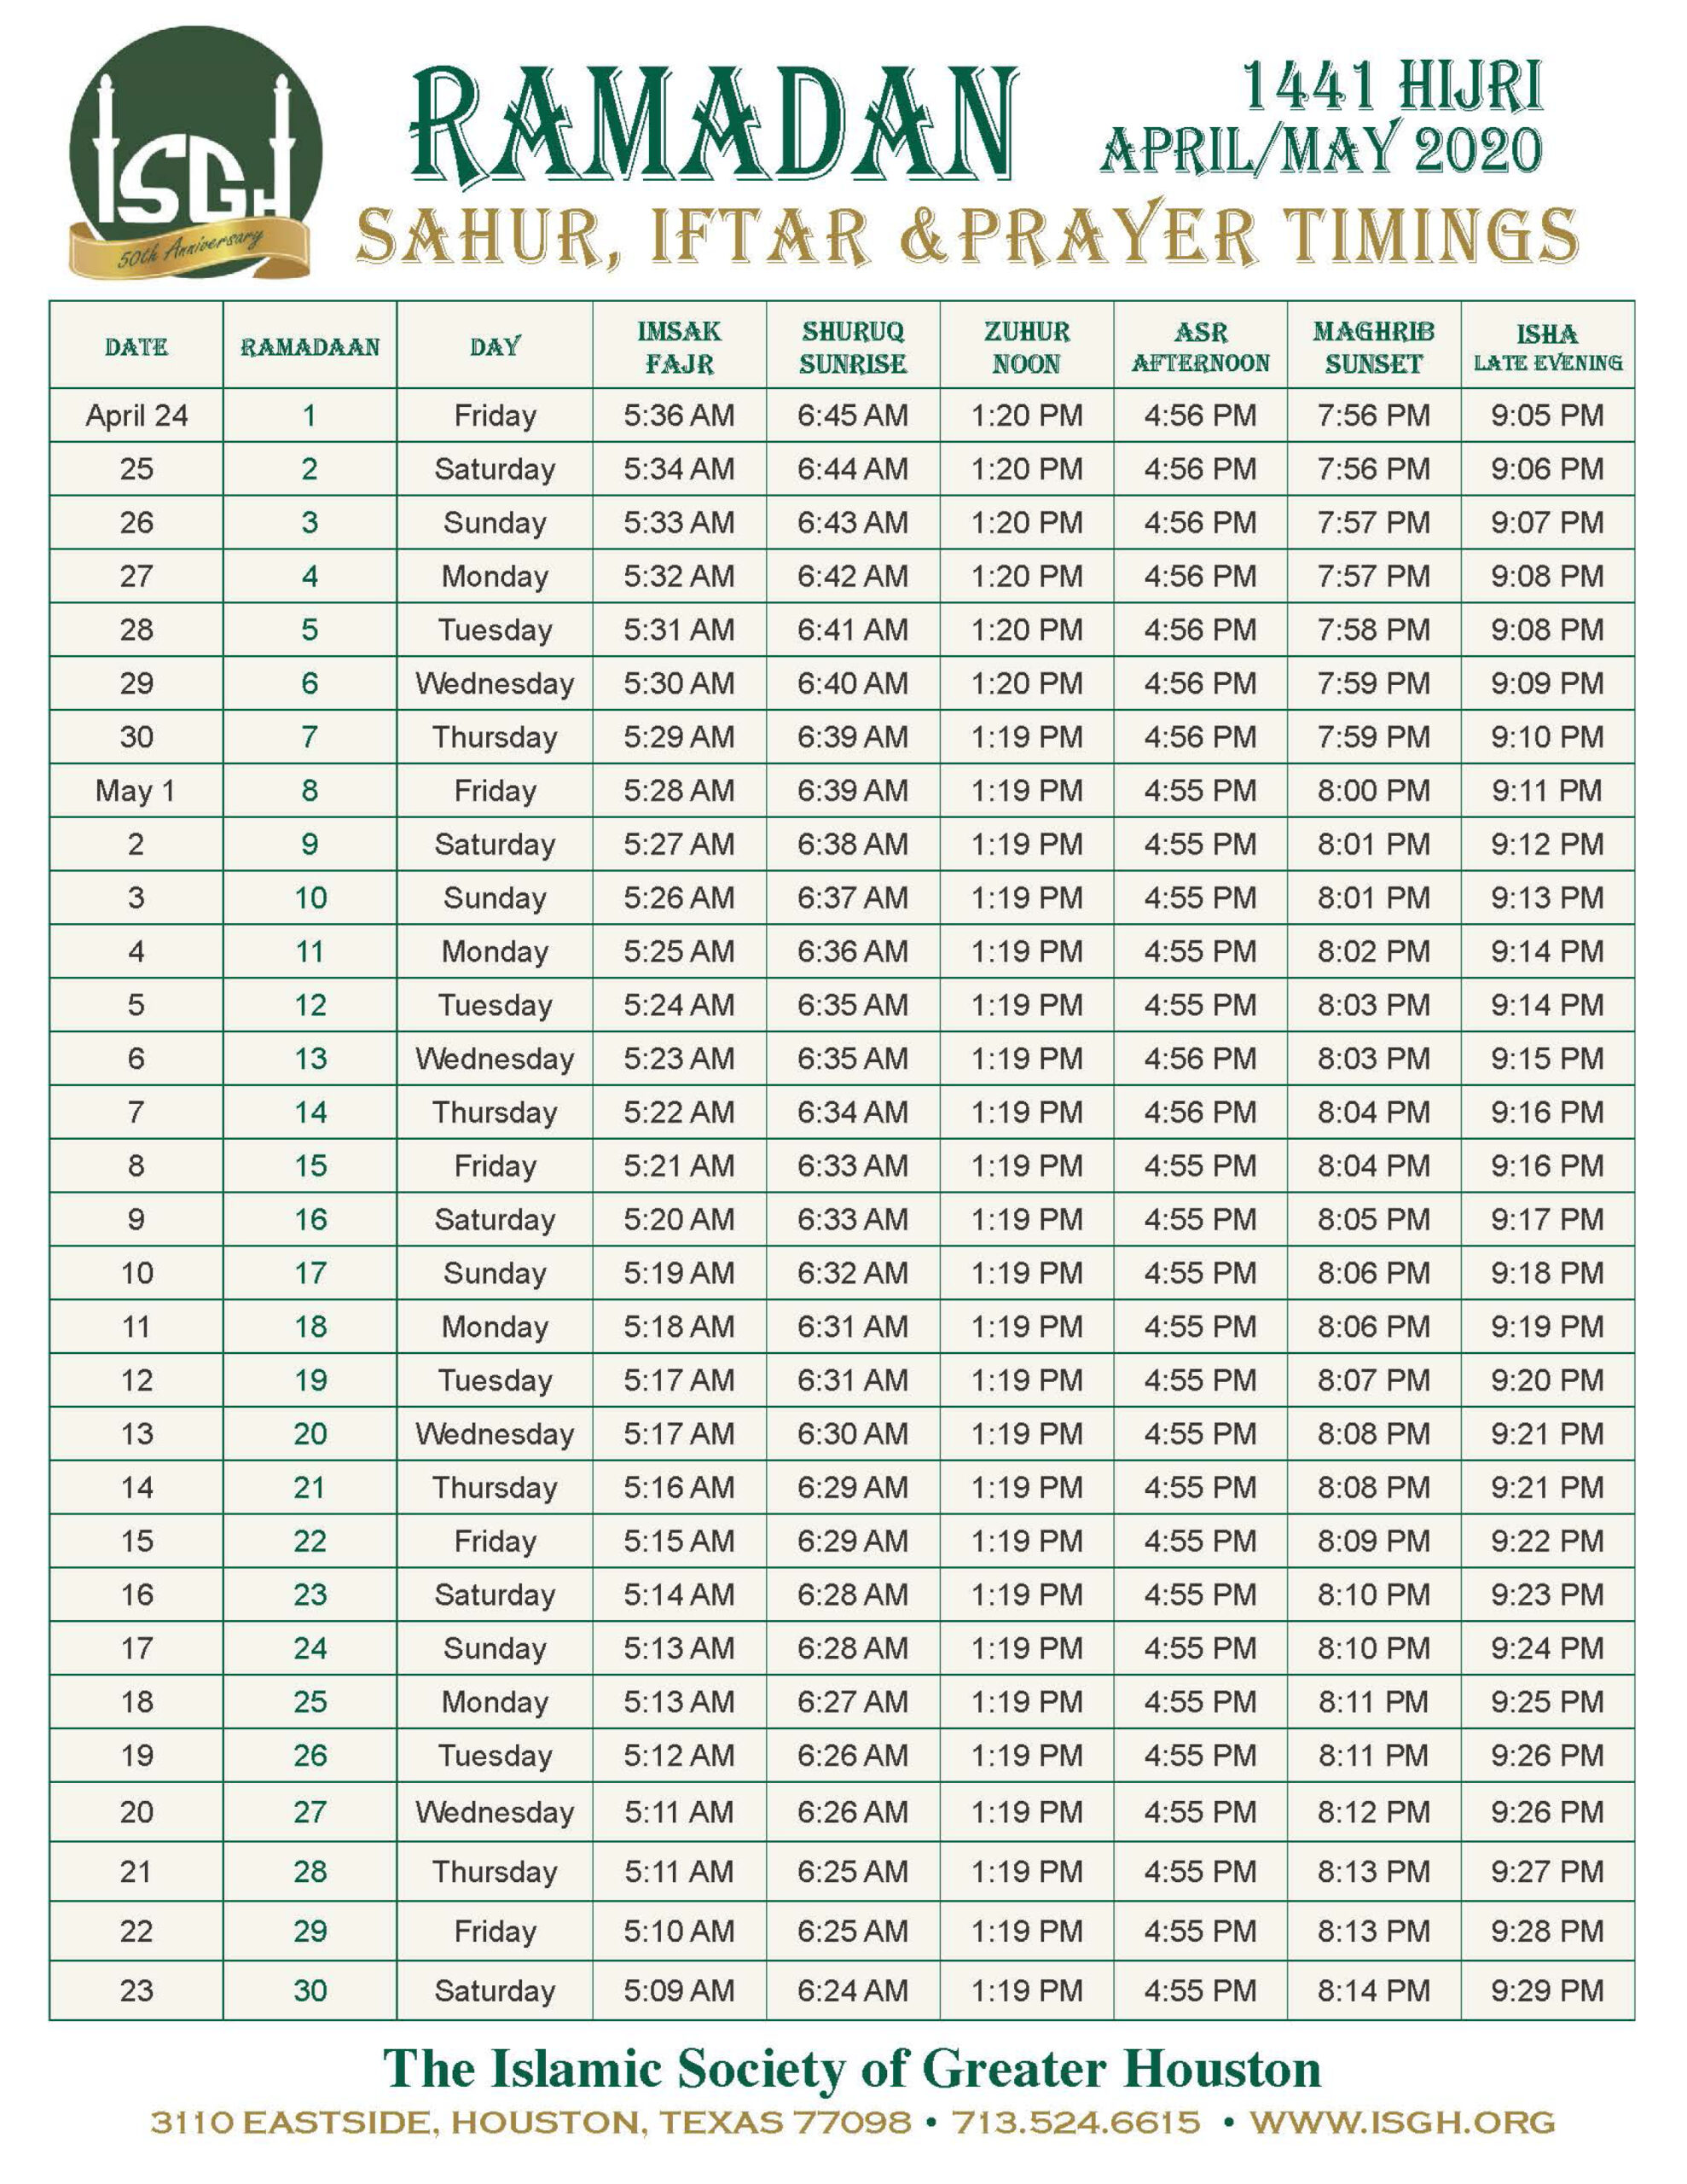 shia islamic calendar 2021